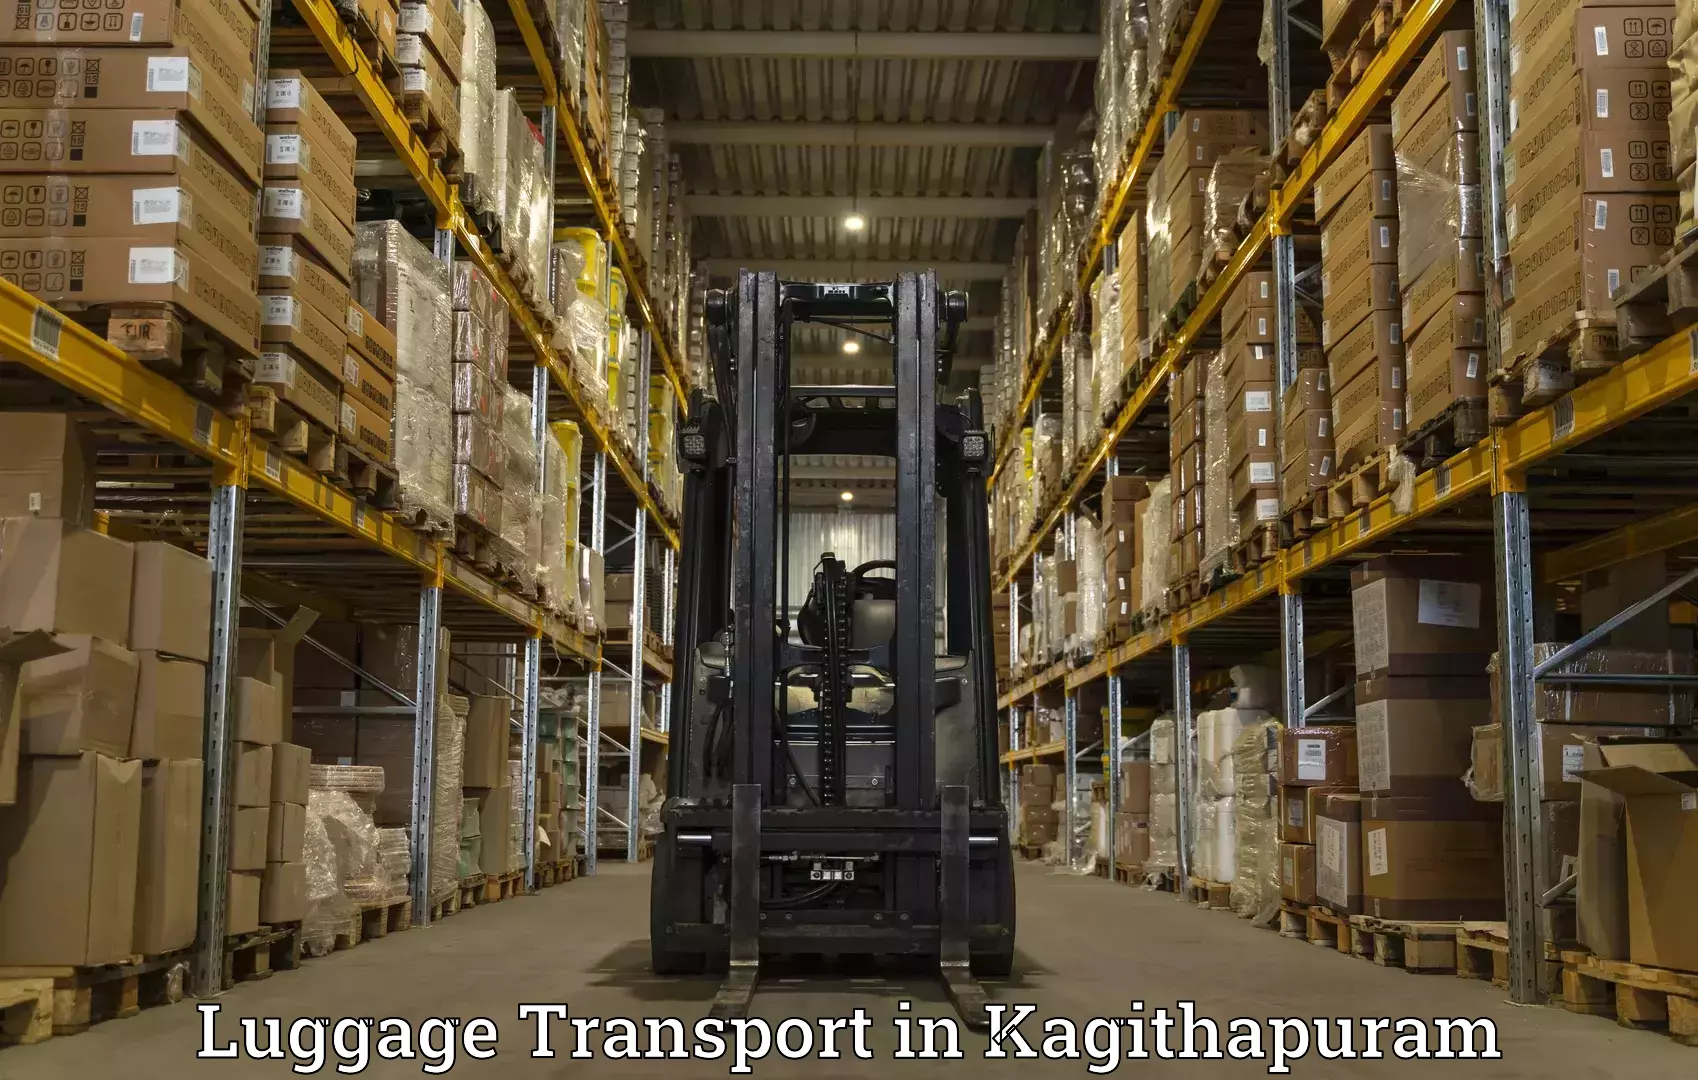 Baggage transport innovation in Kagithapuram